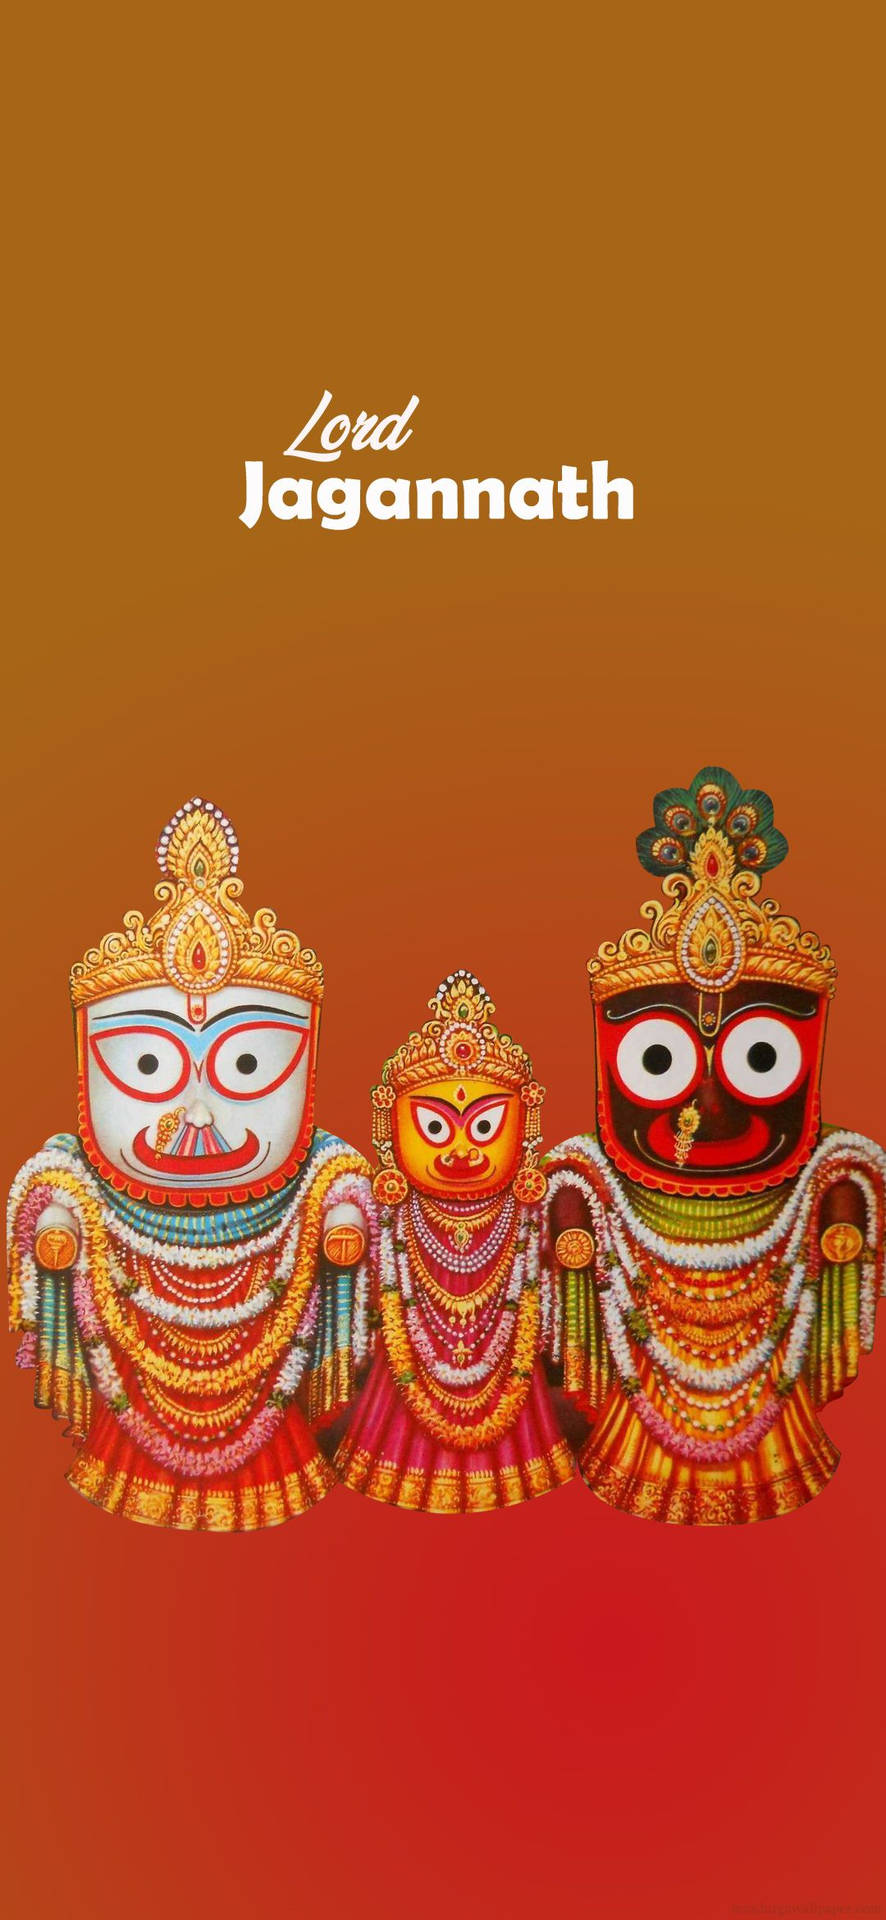 Jagannath With Hindu Gods